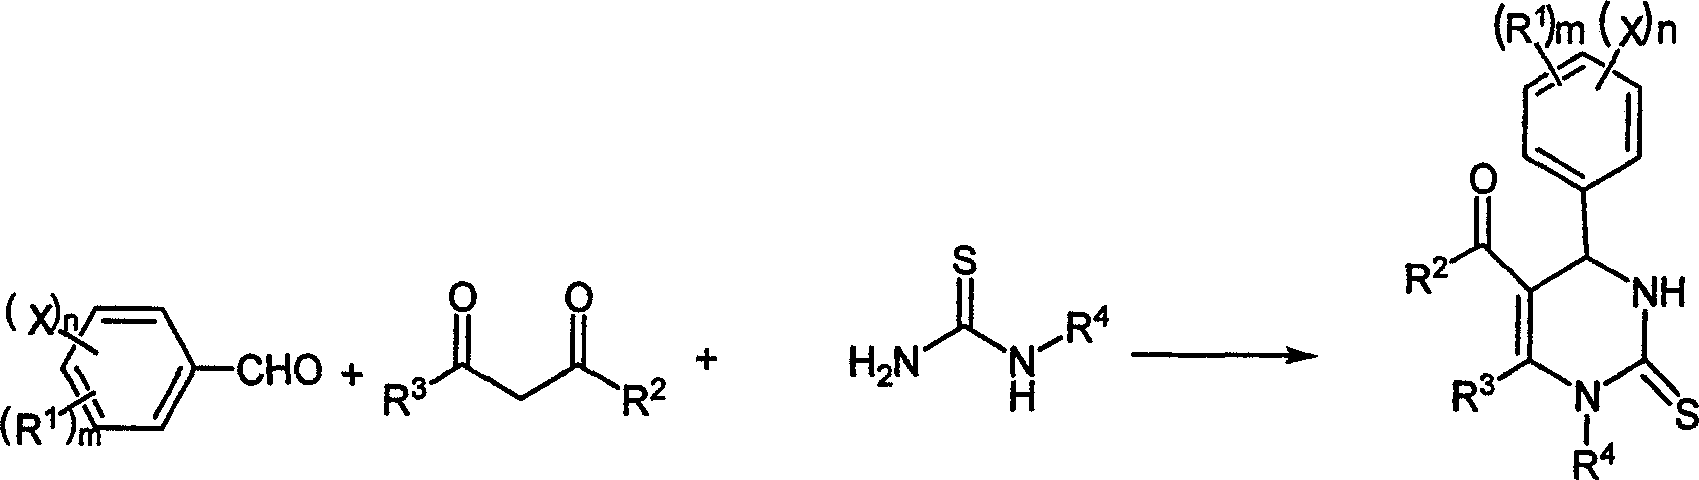 Chemical synthesis method of pyrimidine thioketone